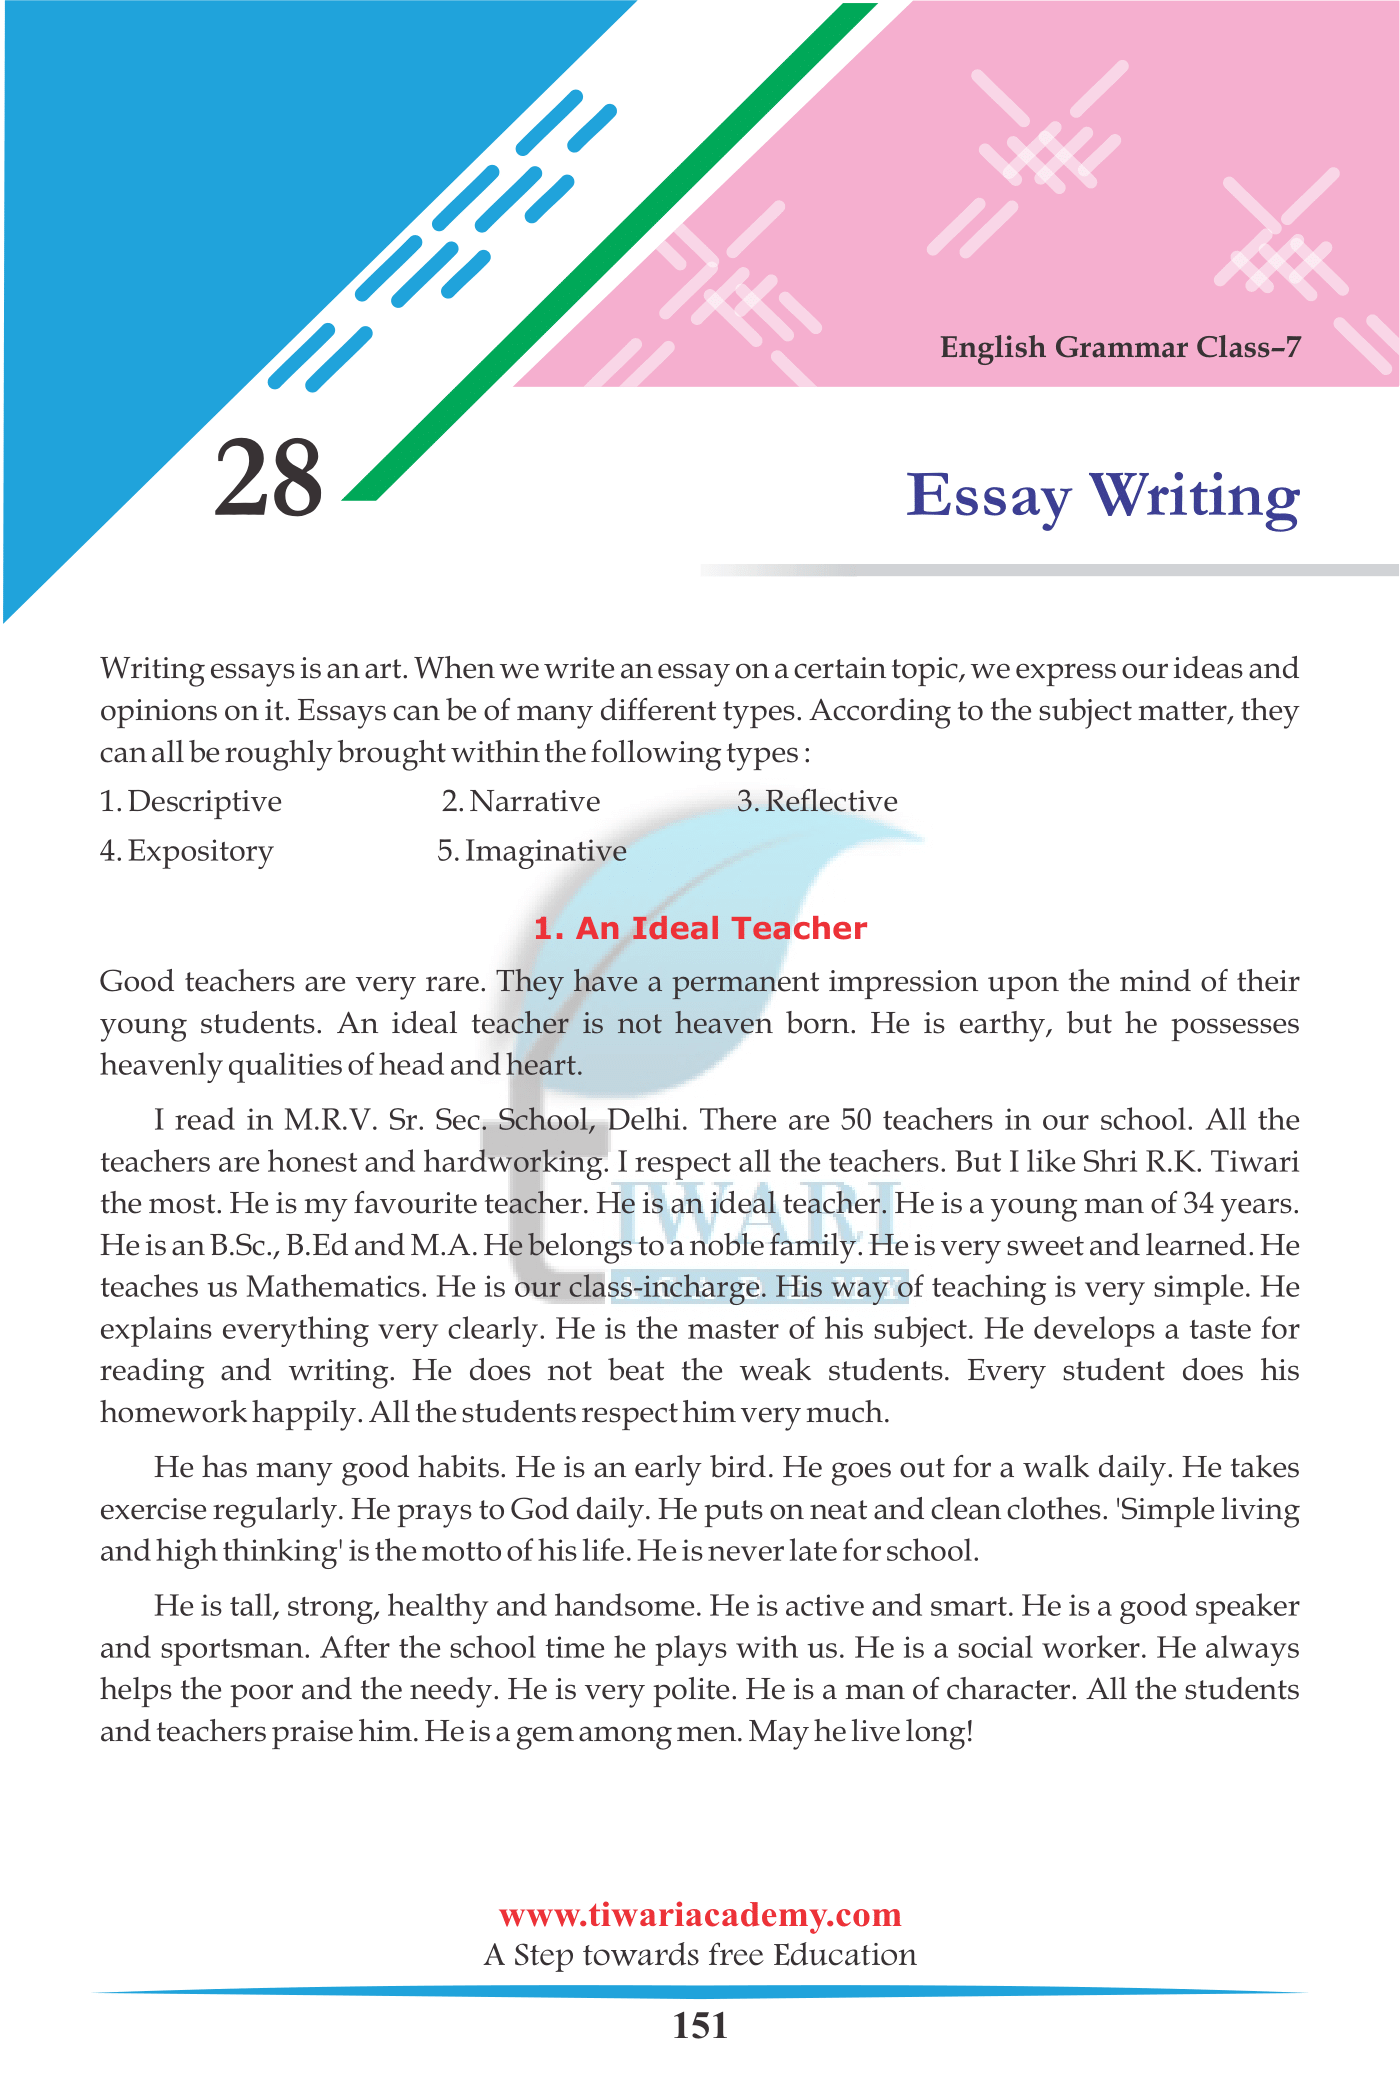 Class 7 English Grammar Chapter 28 Essay Writing practice